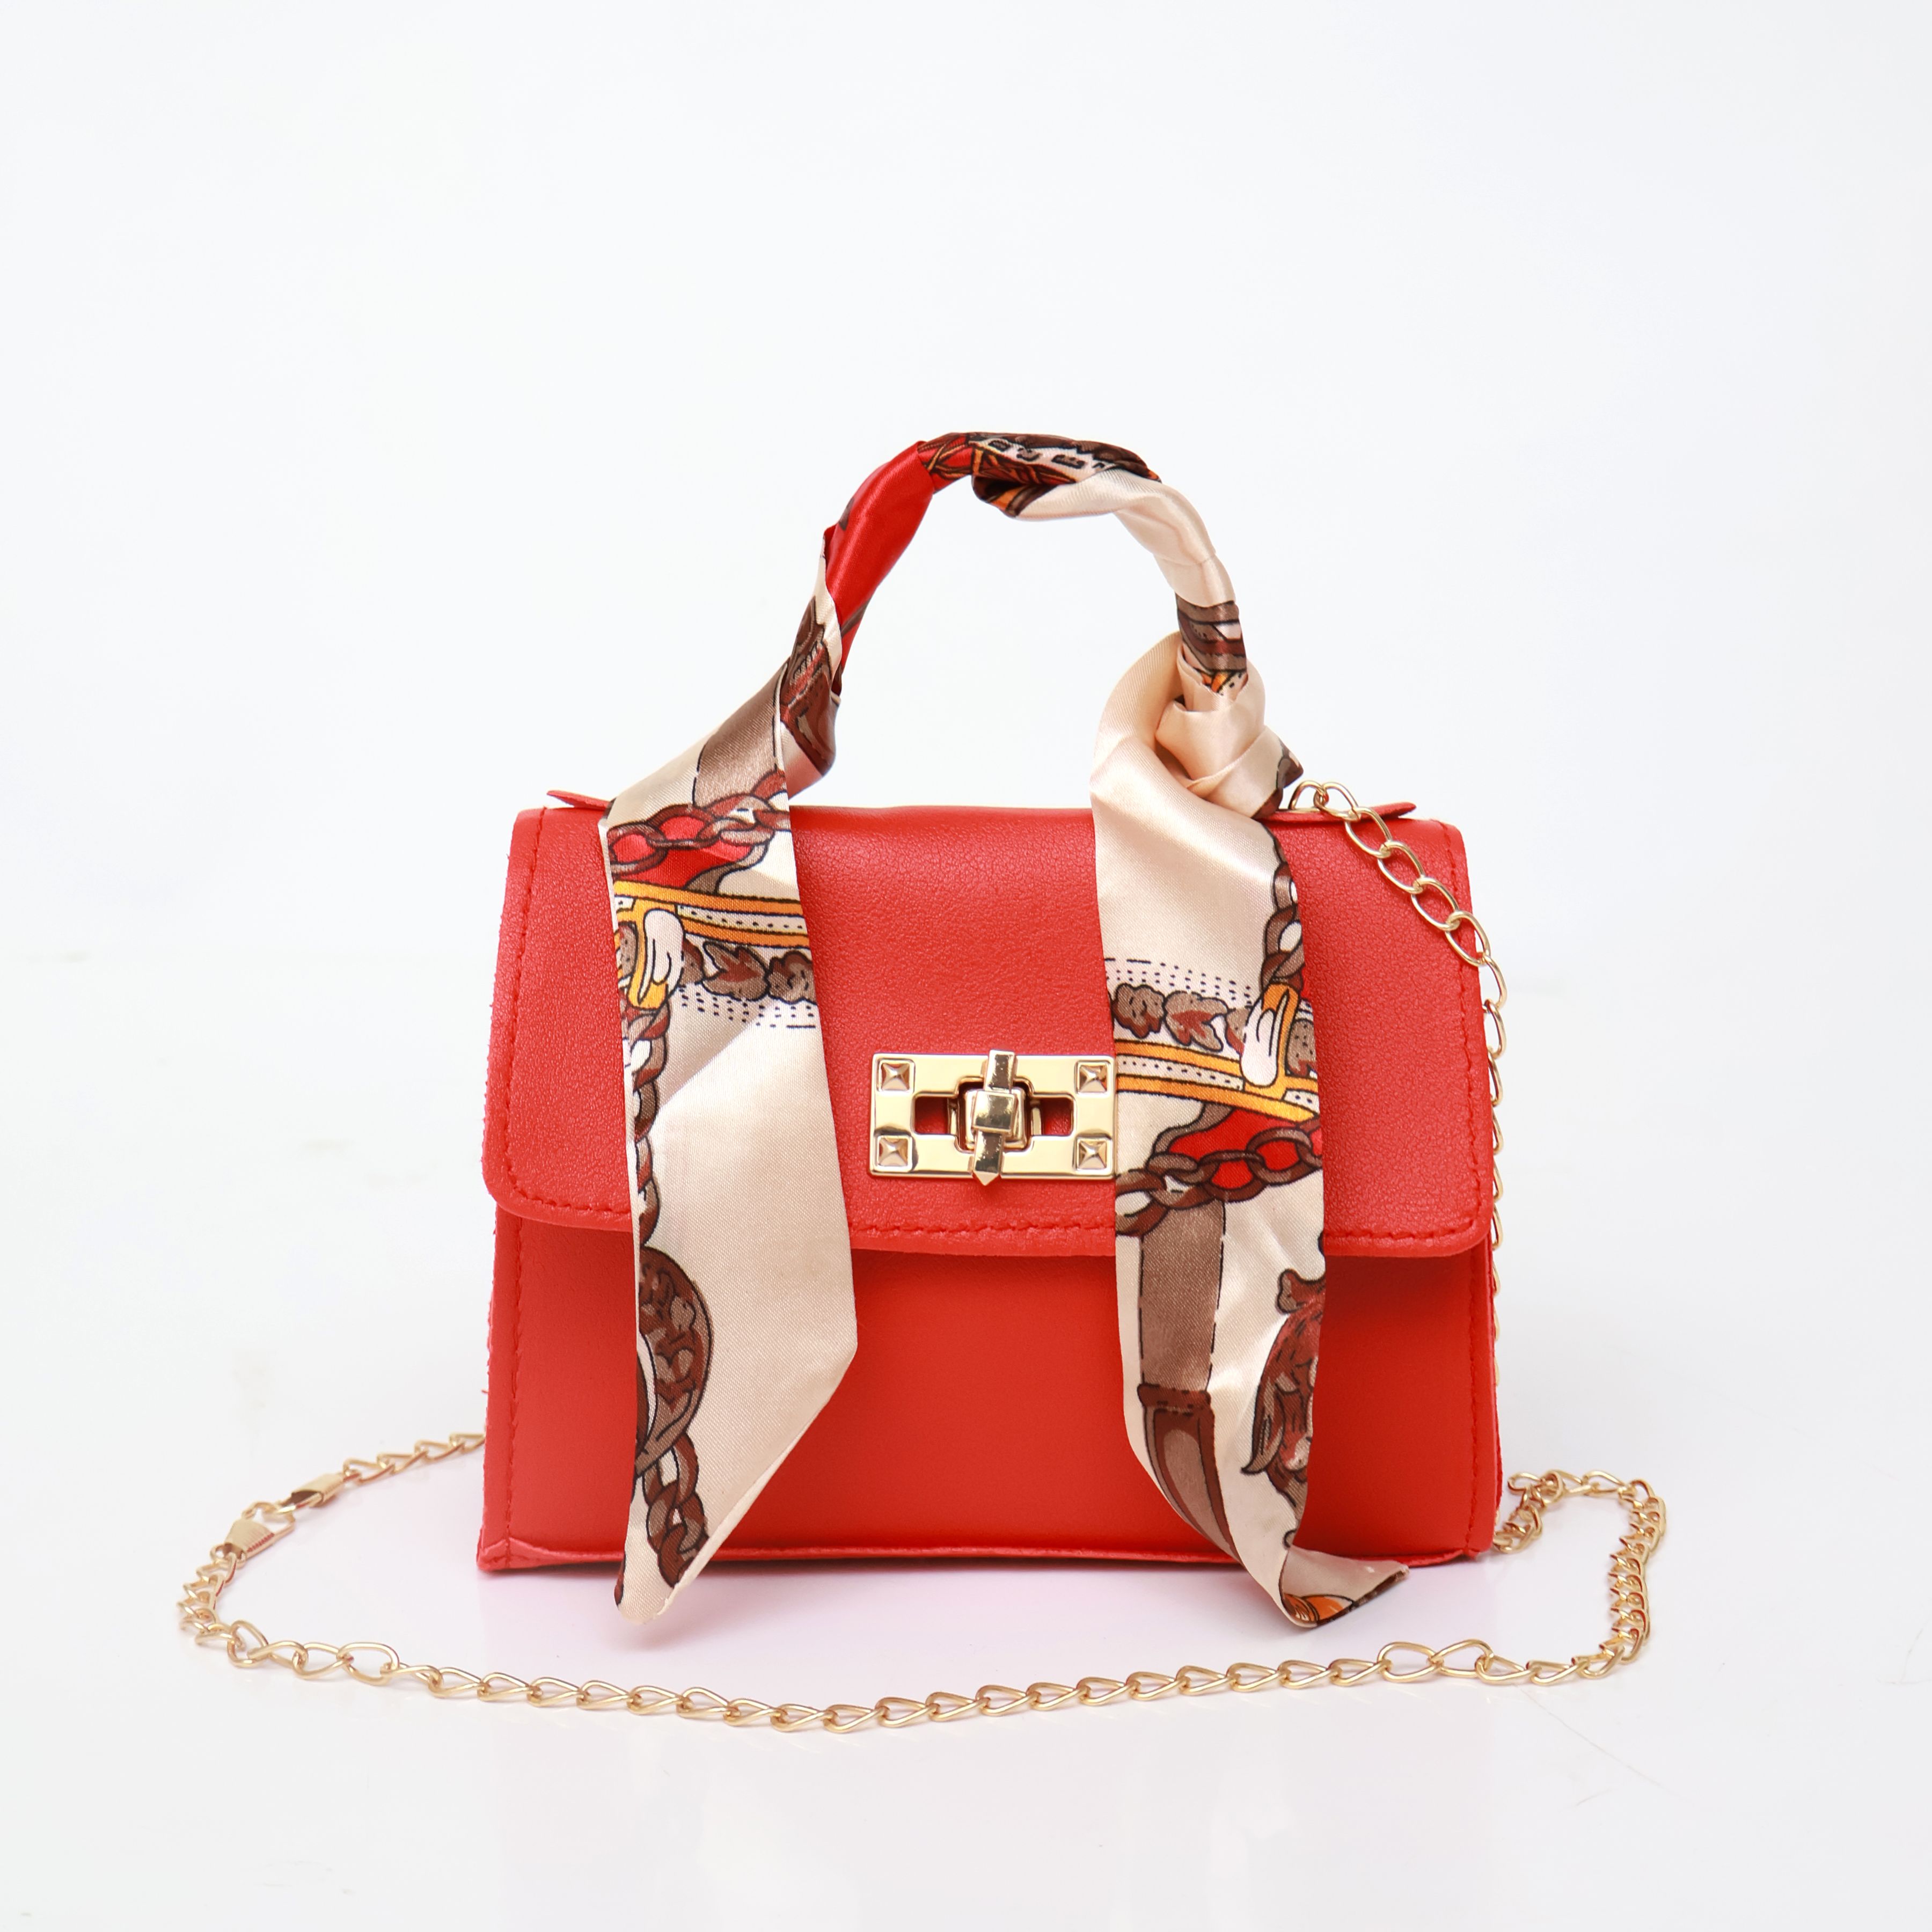 Buy Ladies Bags Online - Shop on Carrefour Qatar